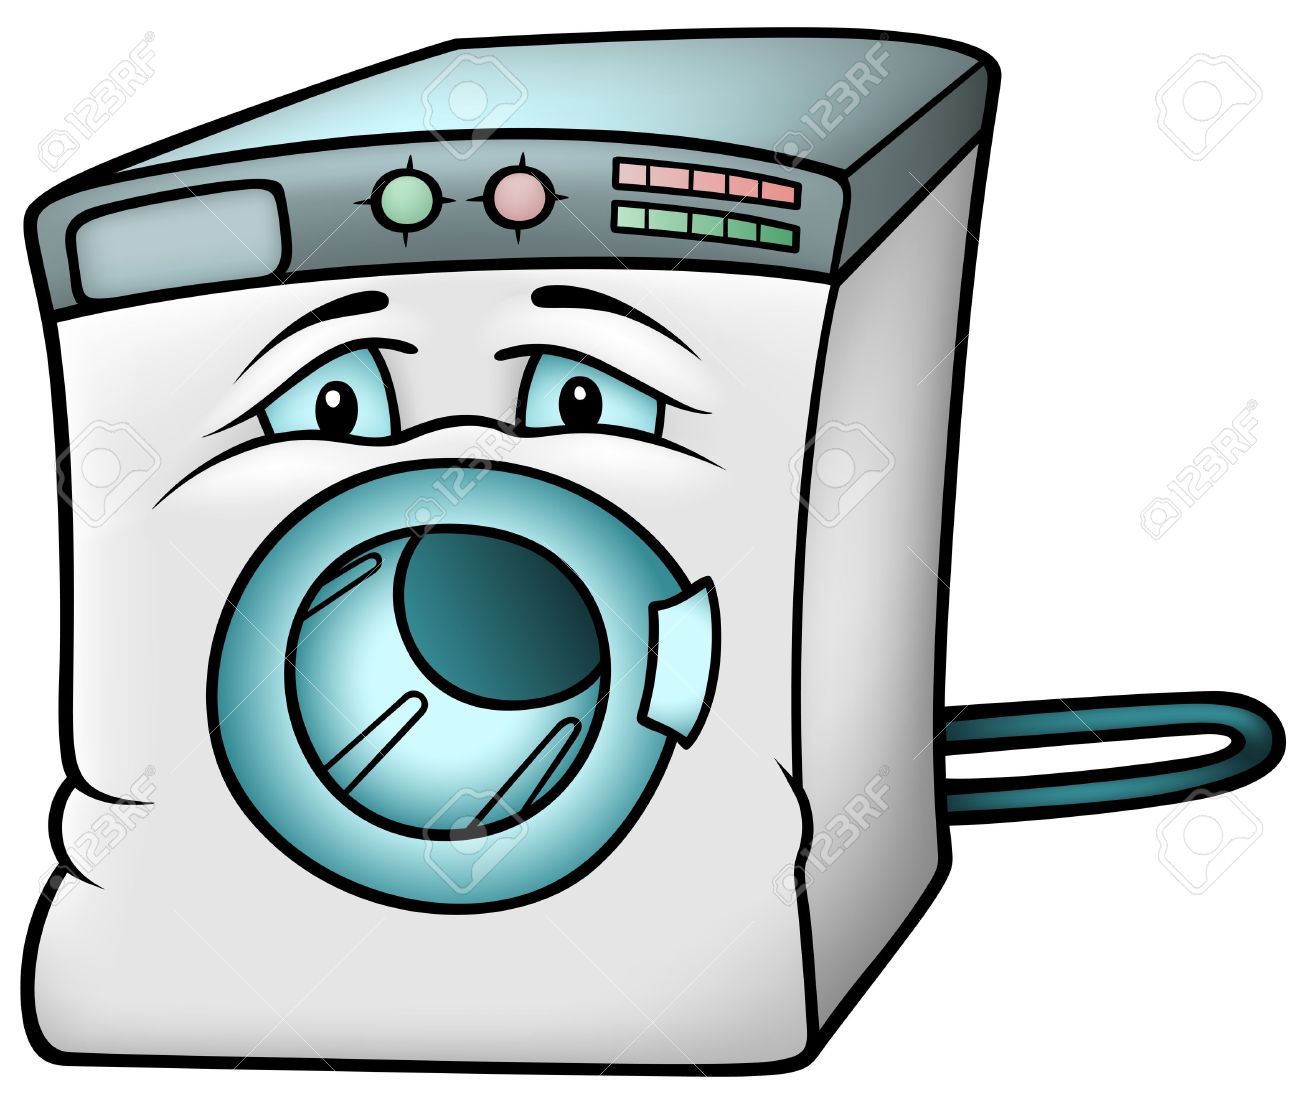 Washing machine clip art - Cl